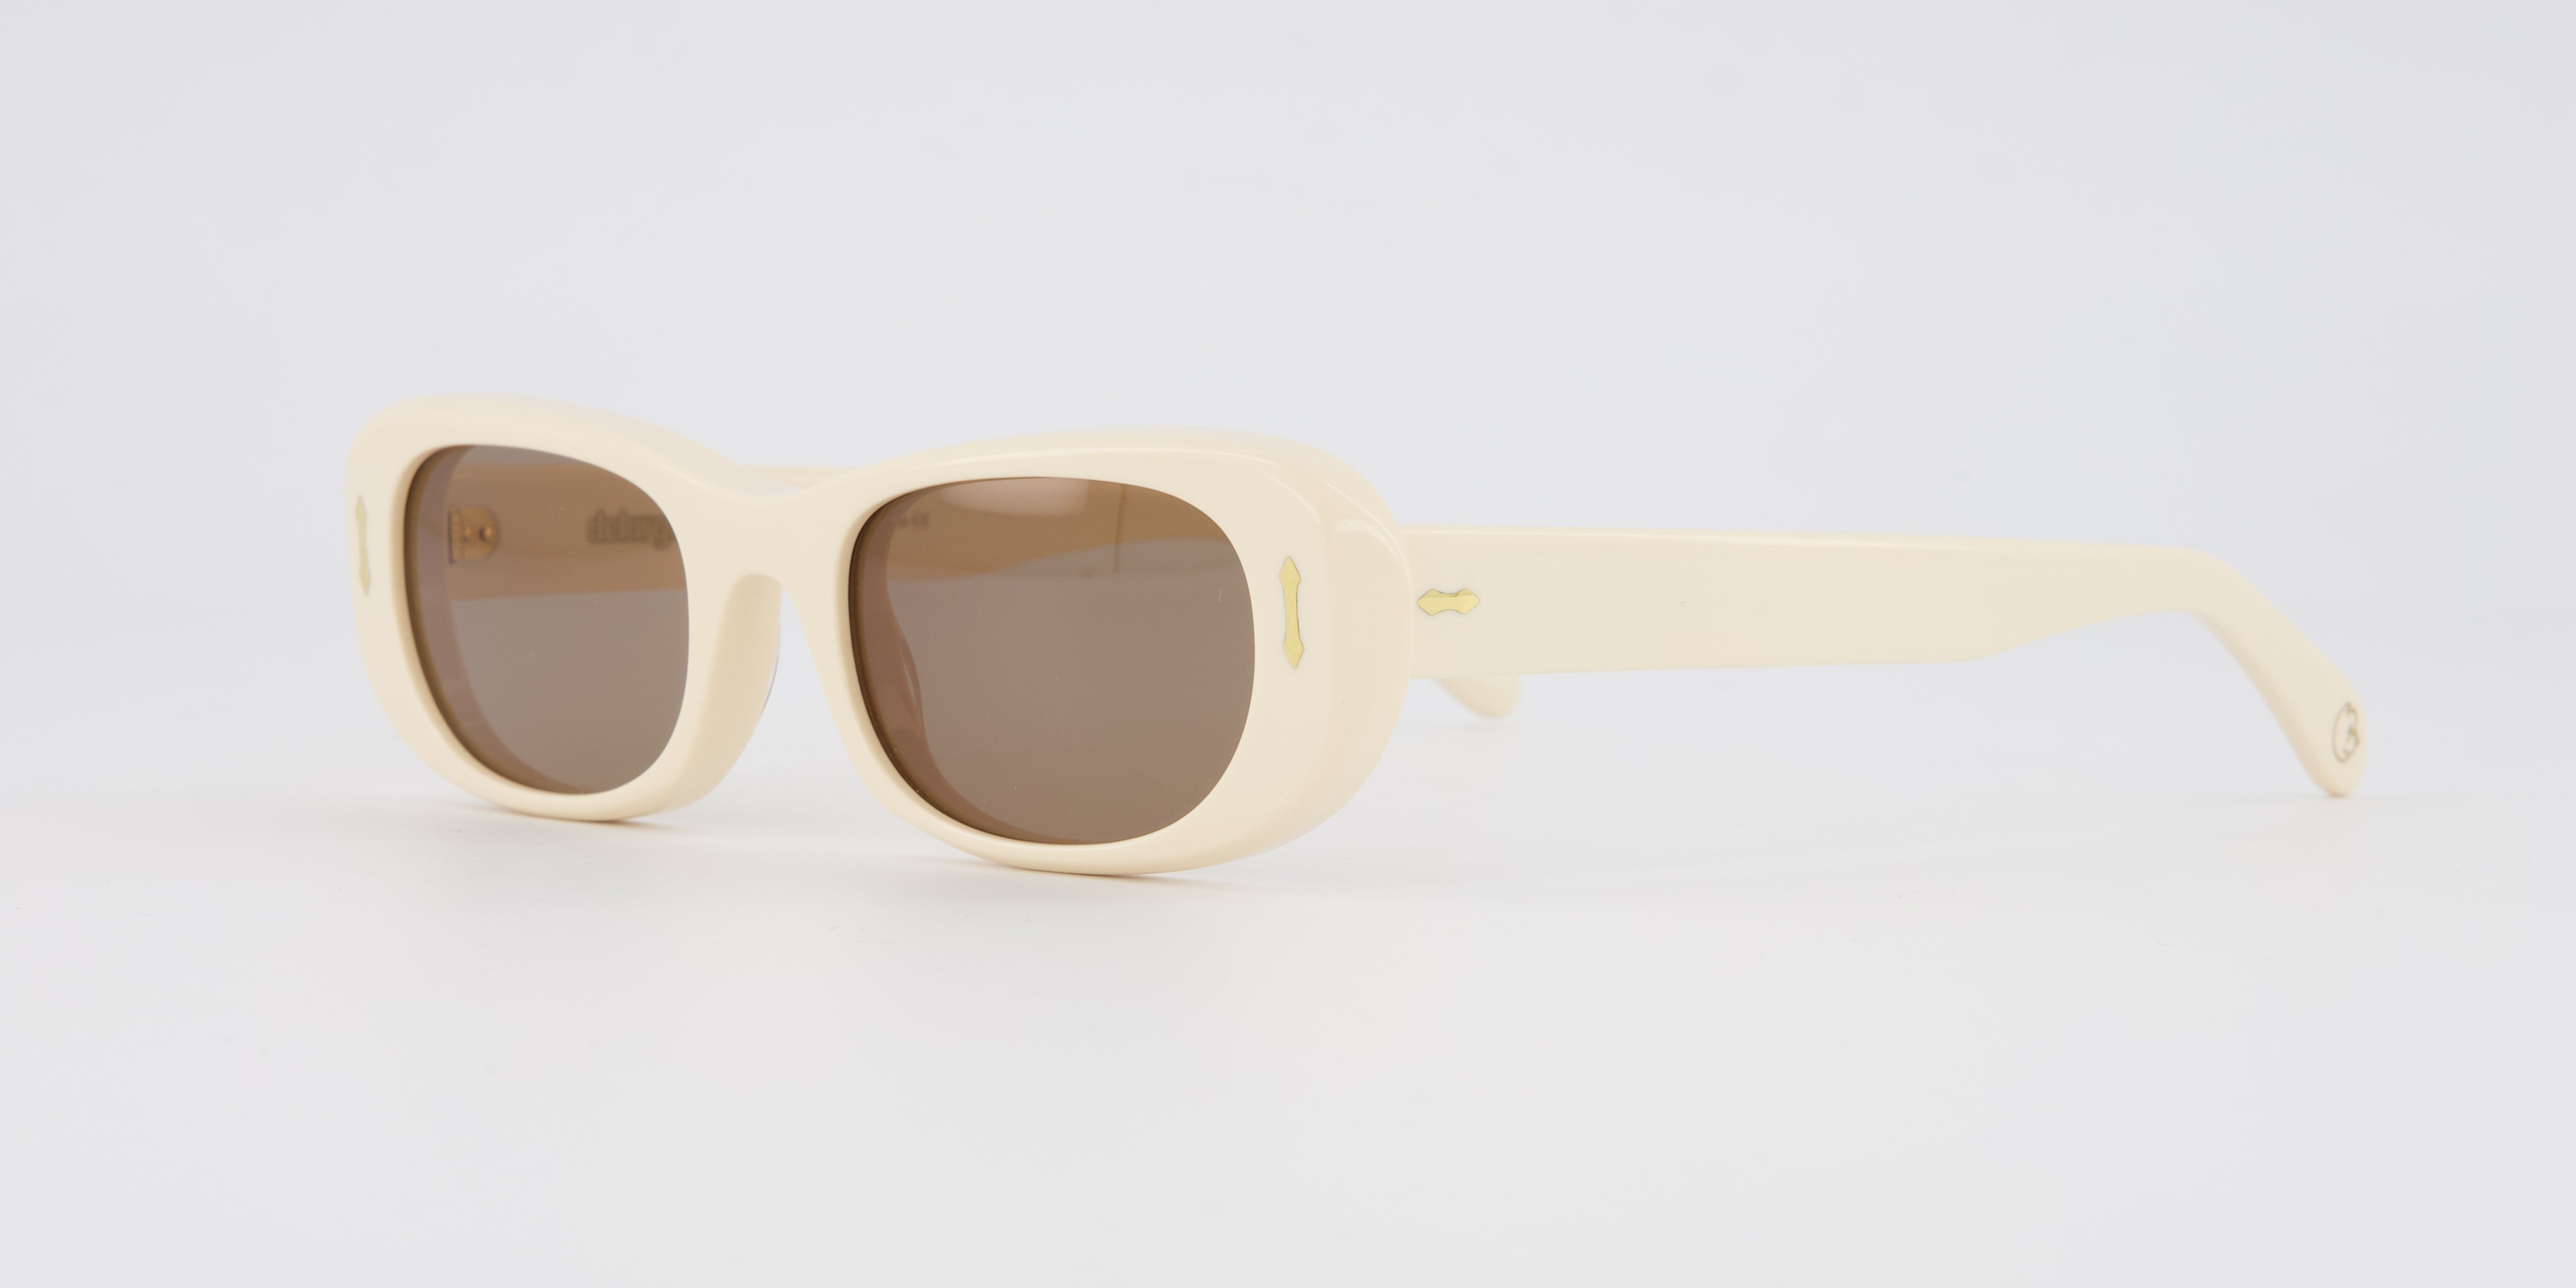 Delarge sunglasses Atkins Butter